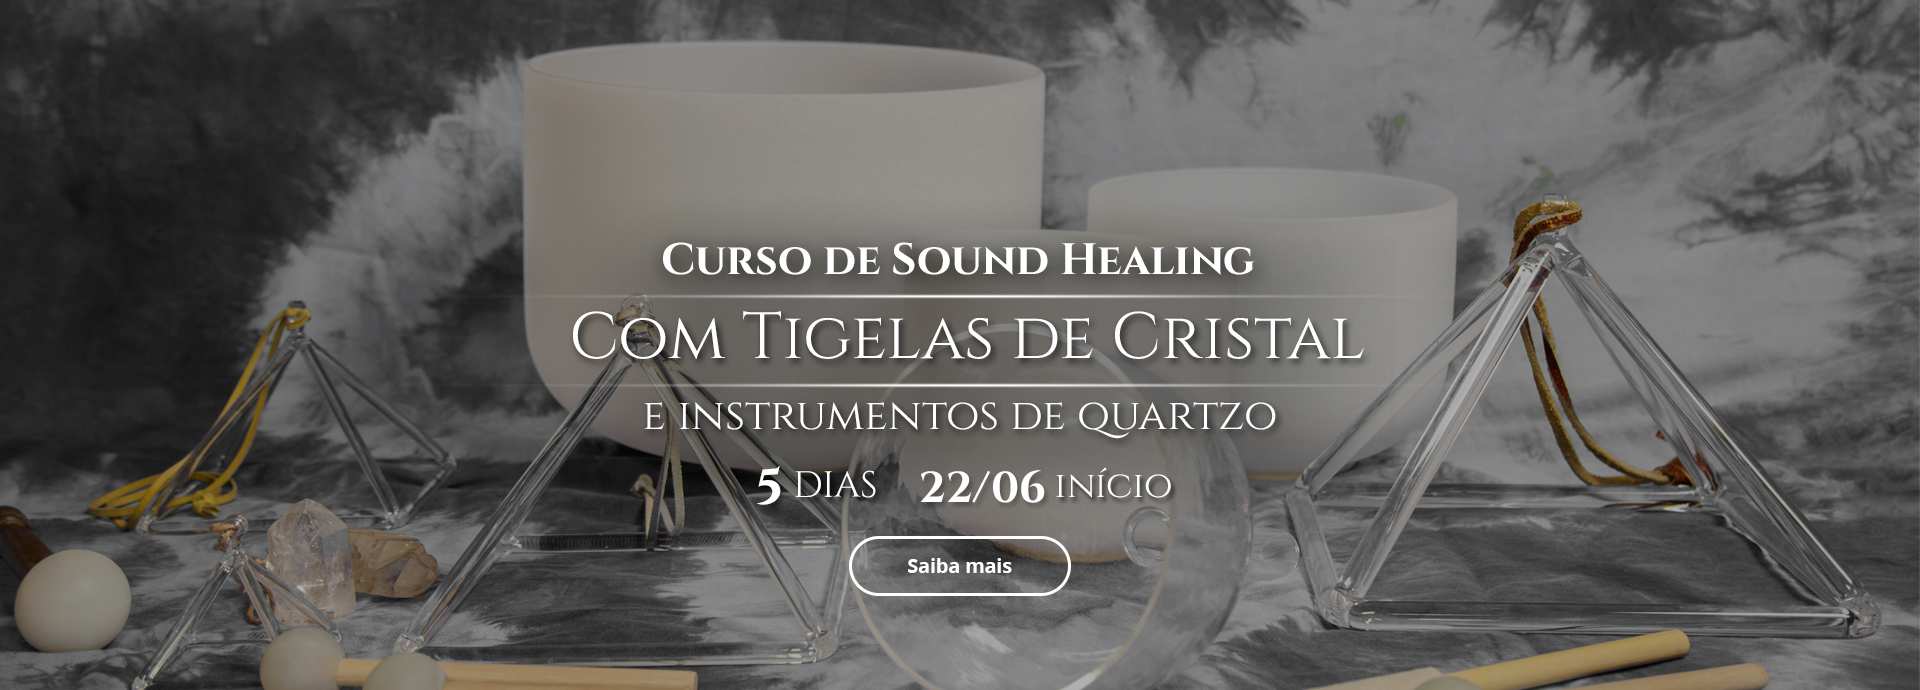 curso sound healing